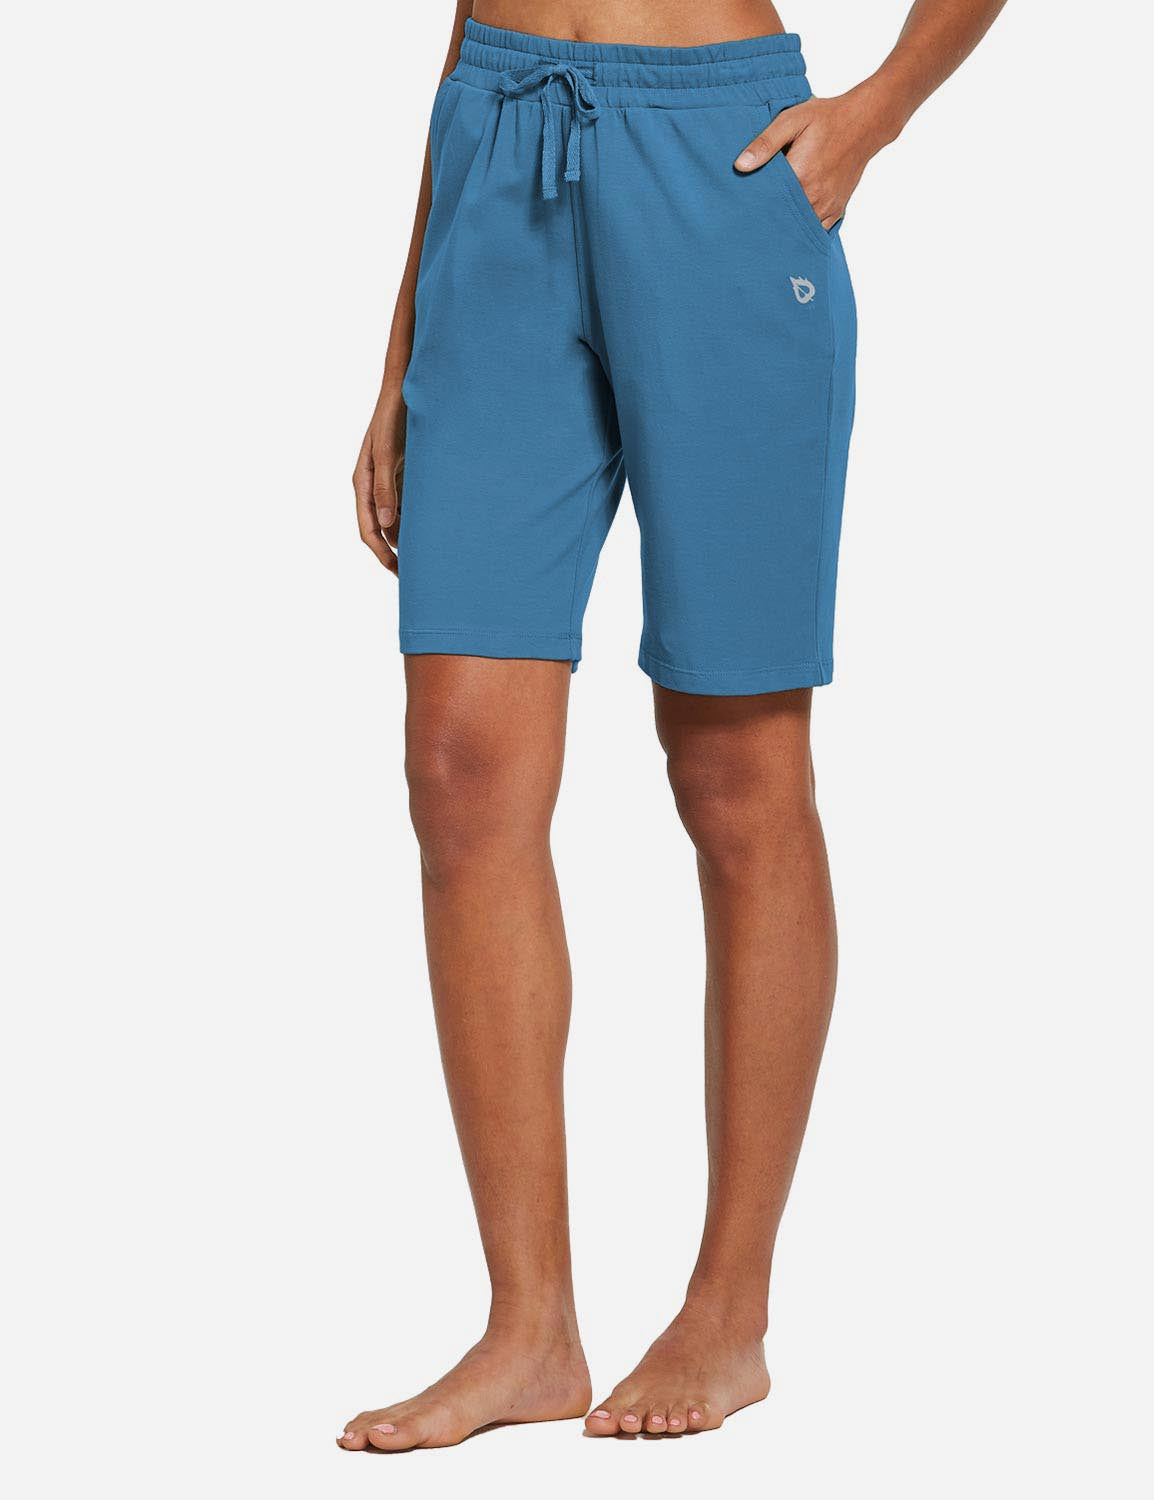 Baleaf Women's Mid-Rise Cotton Pocketed Bermuda Shorts abh104 Copen Blue Side